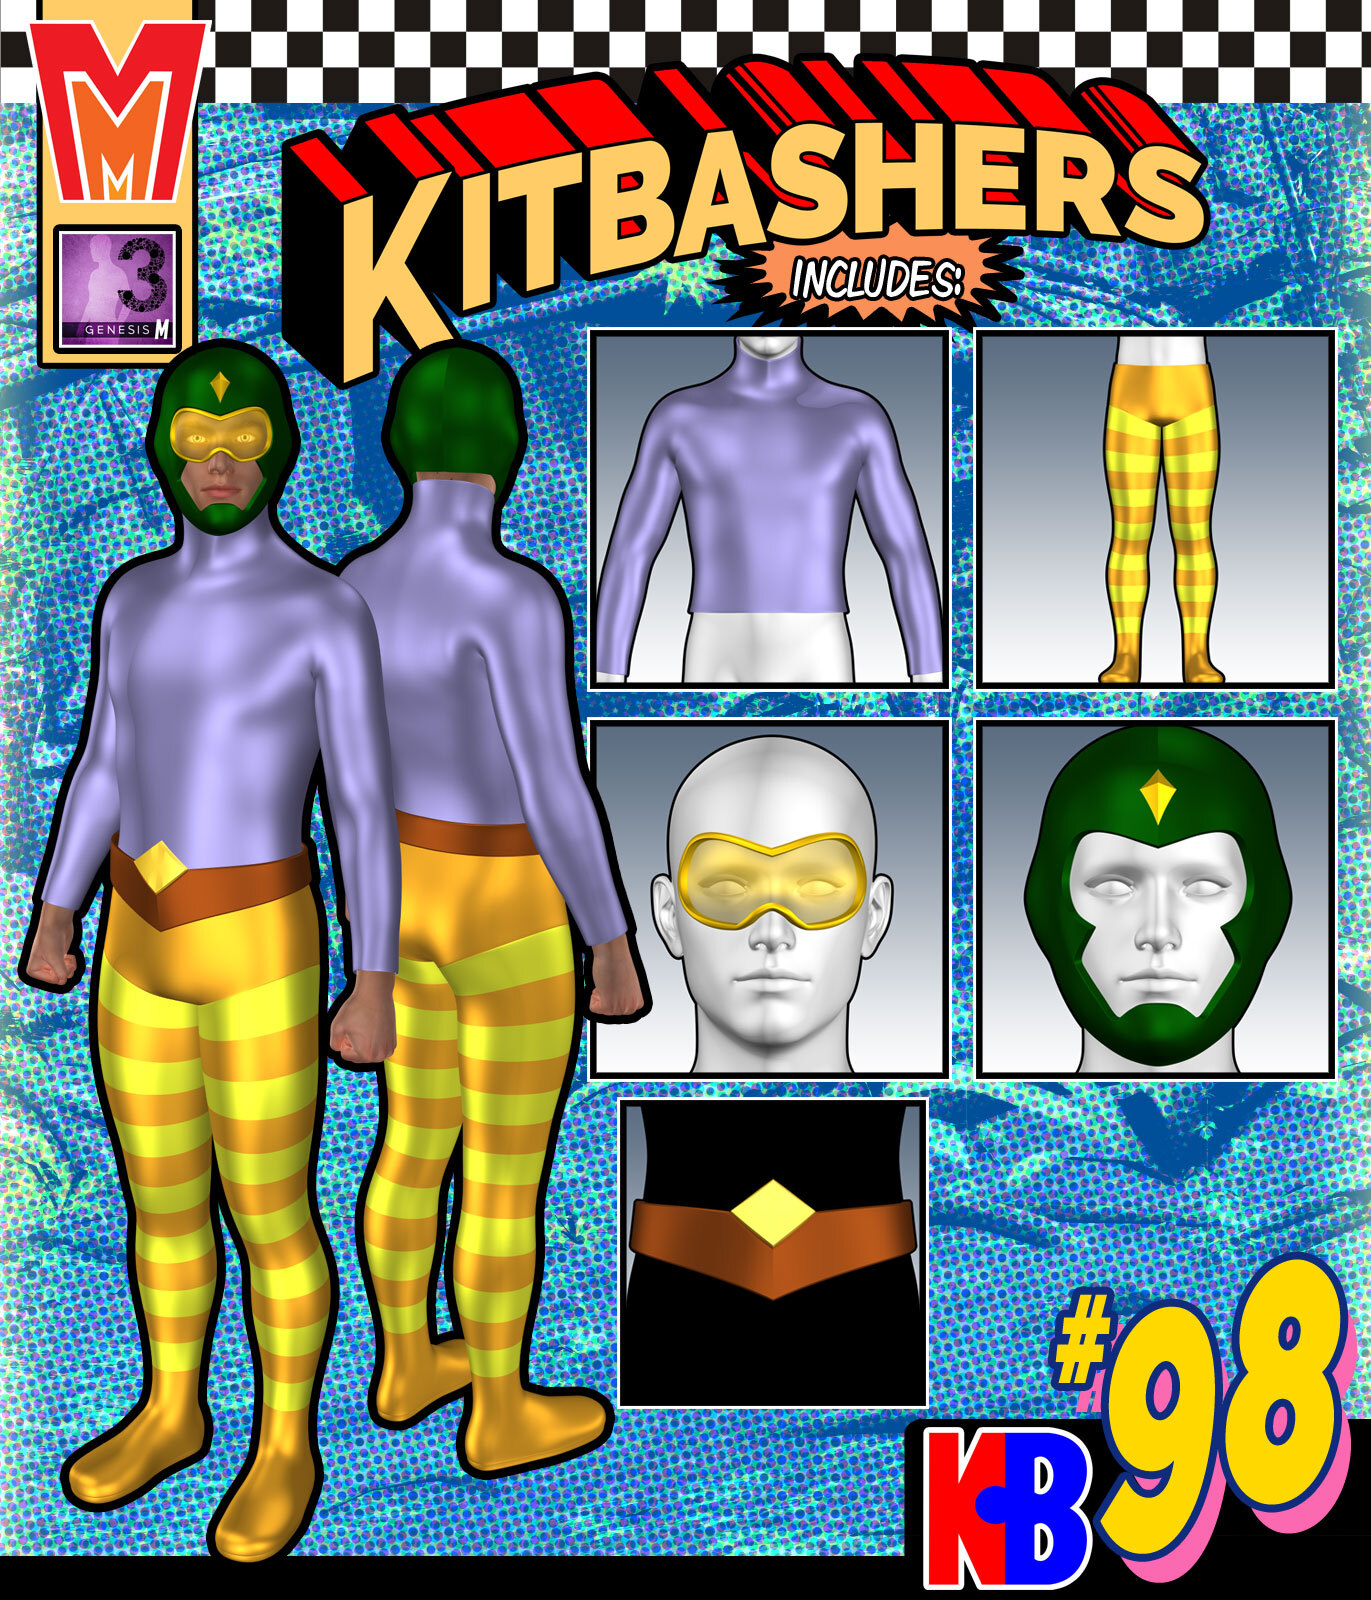 Kitbashers 098 MMG3M by: MightyMite, 3D Models by Daz 3D